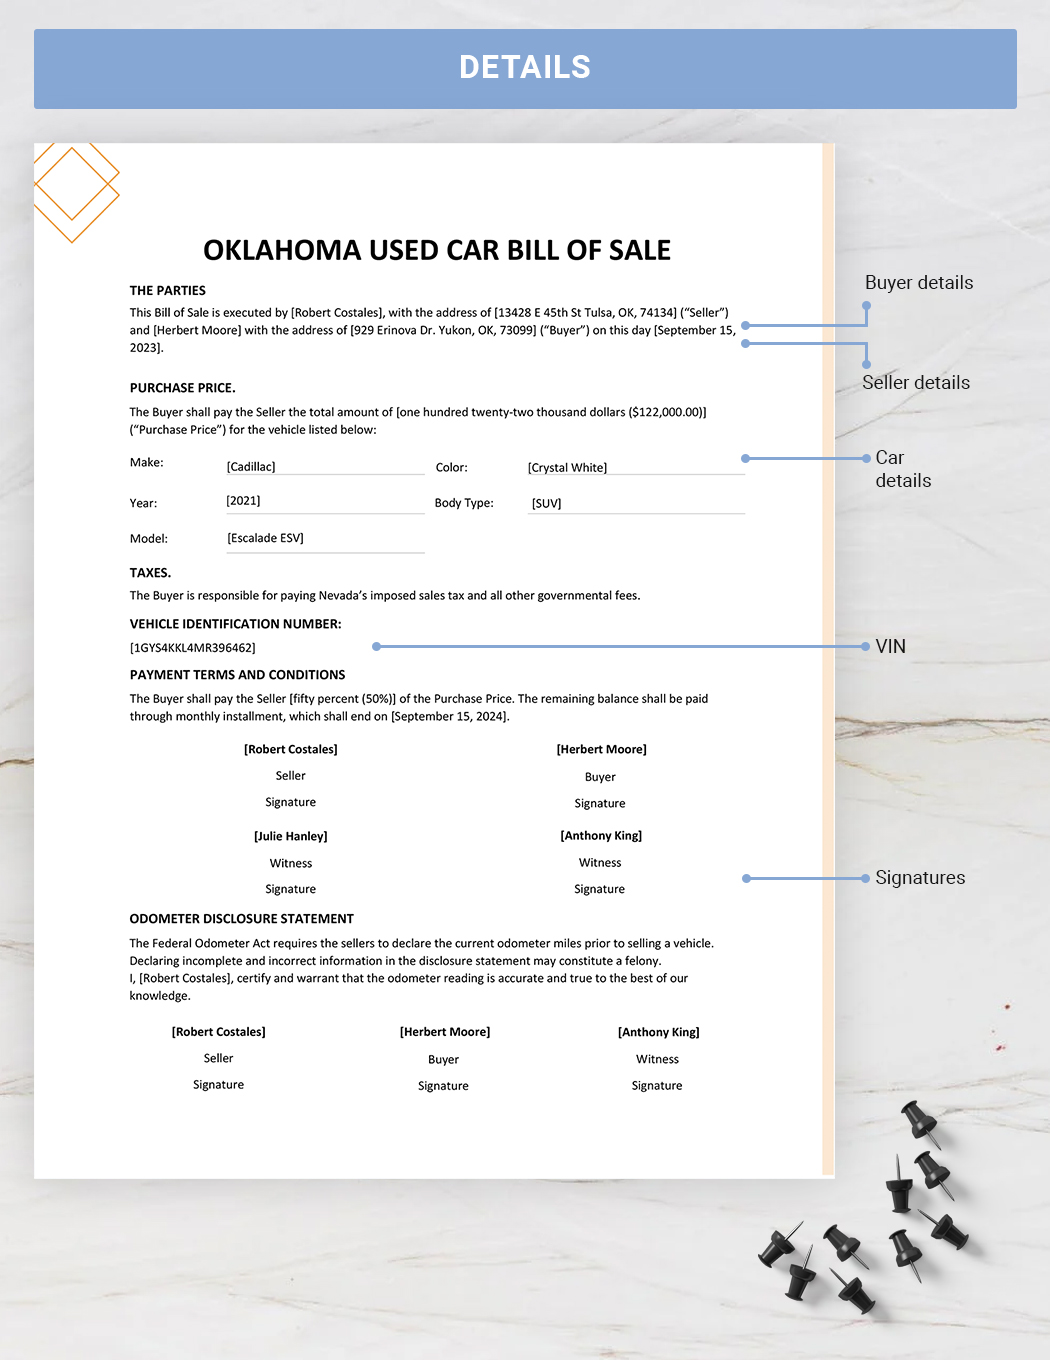 Oklahoma Used Car Bill of Sale Template